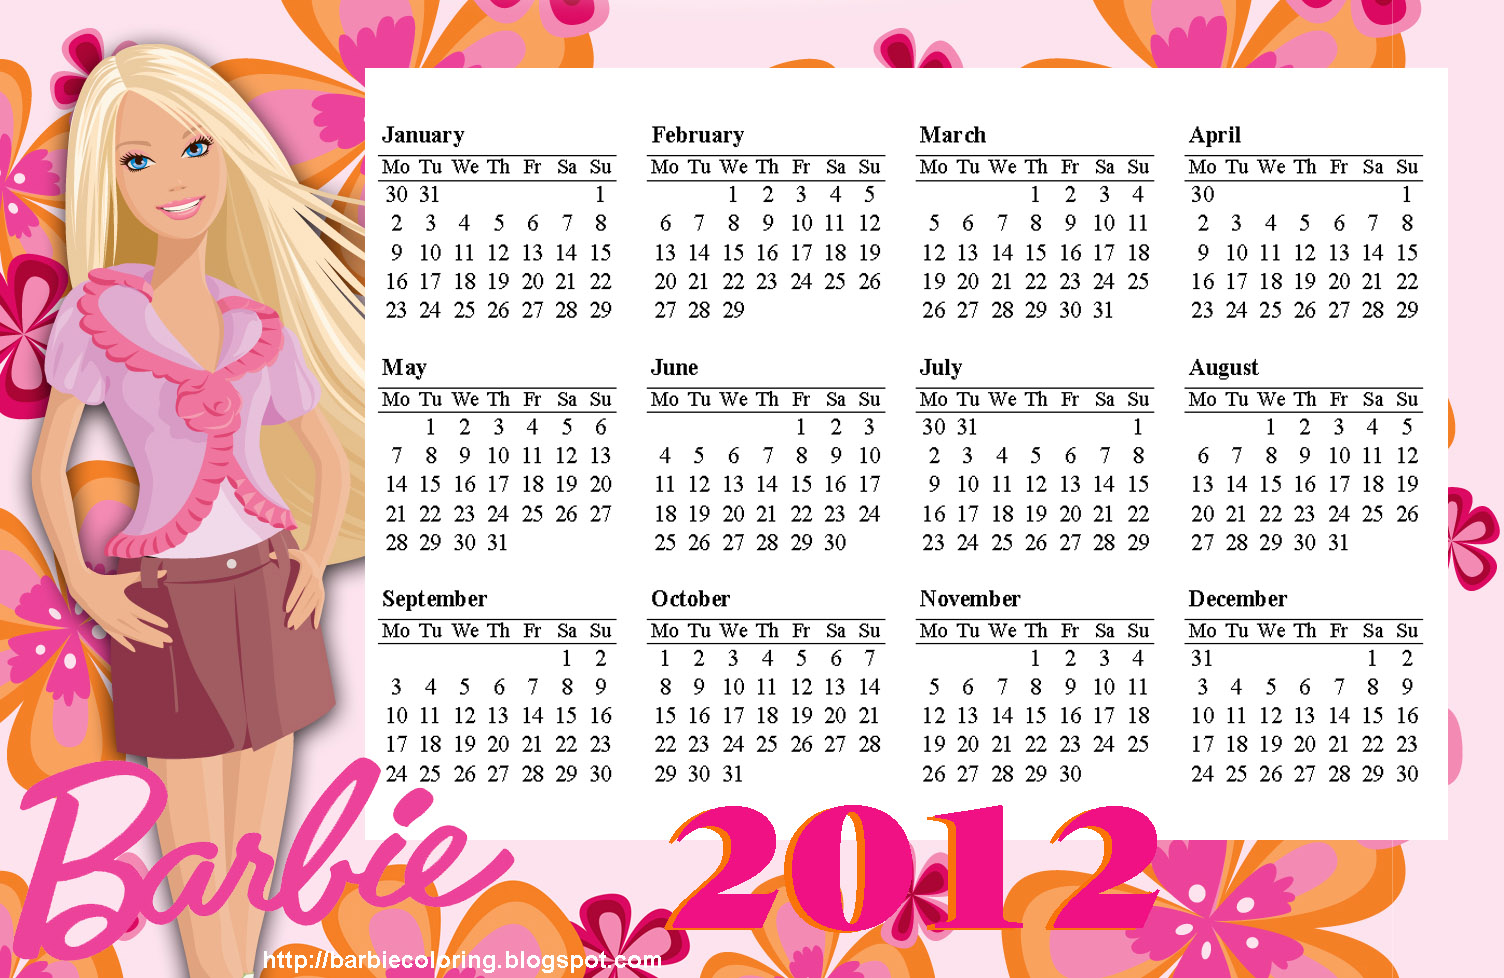 barbie-coloring-pages-free-2012-calendar-printable